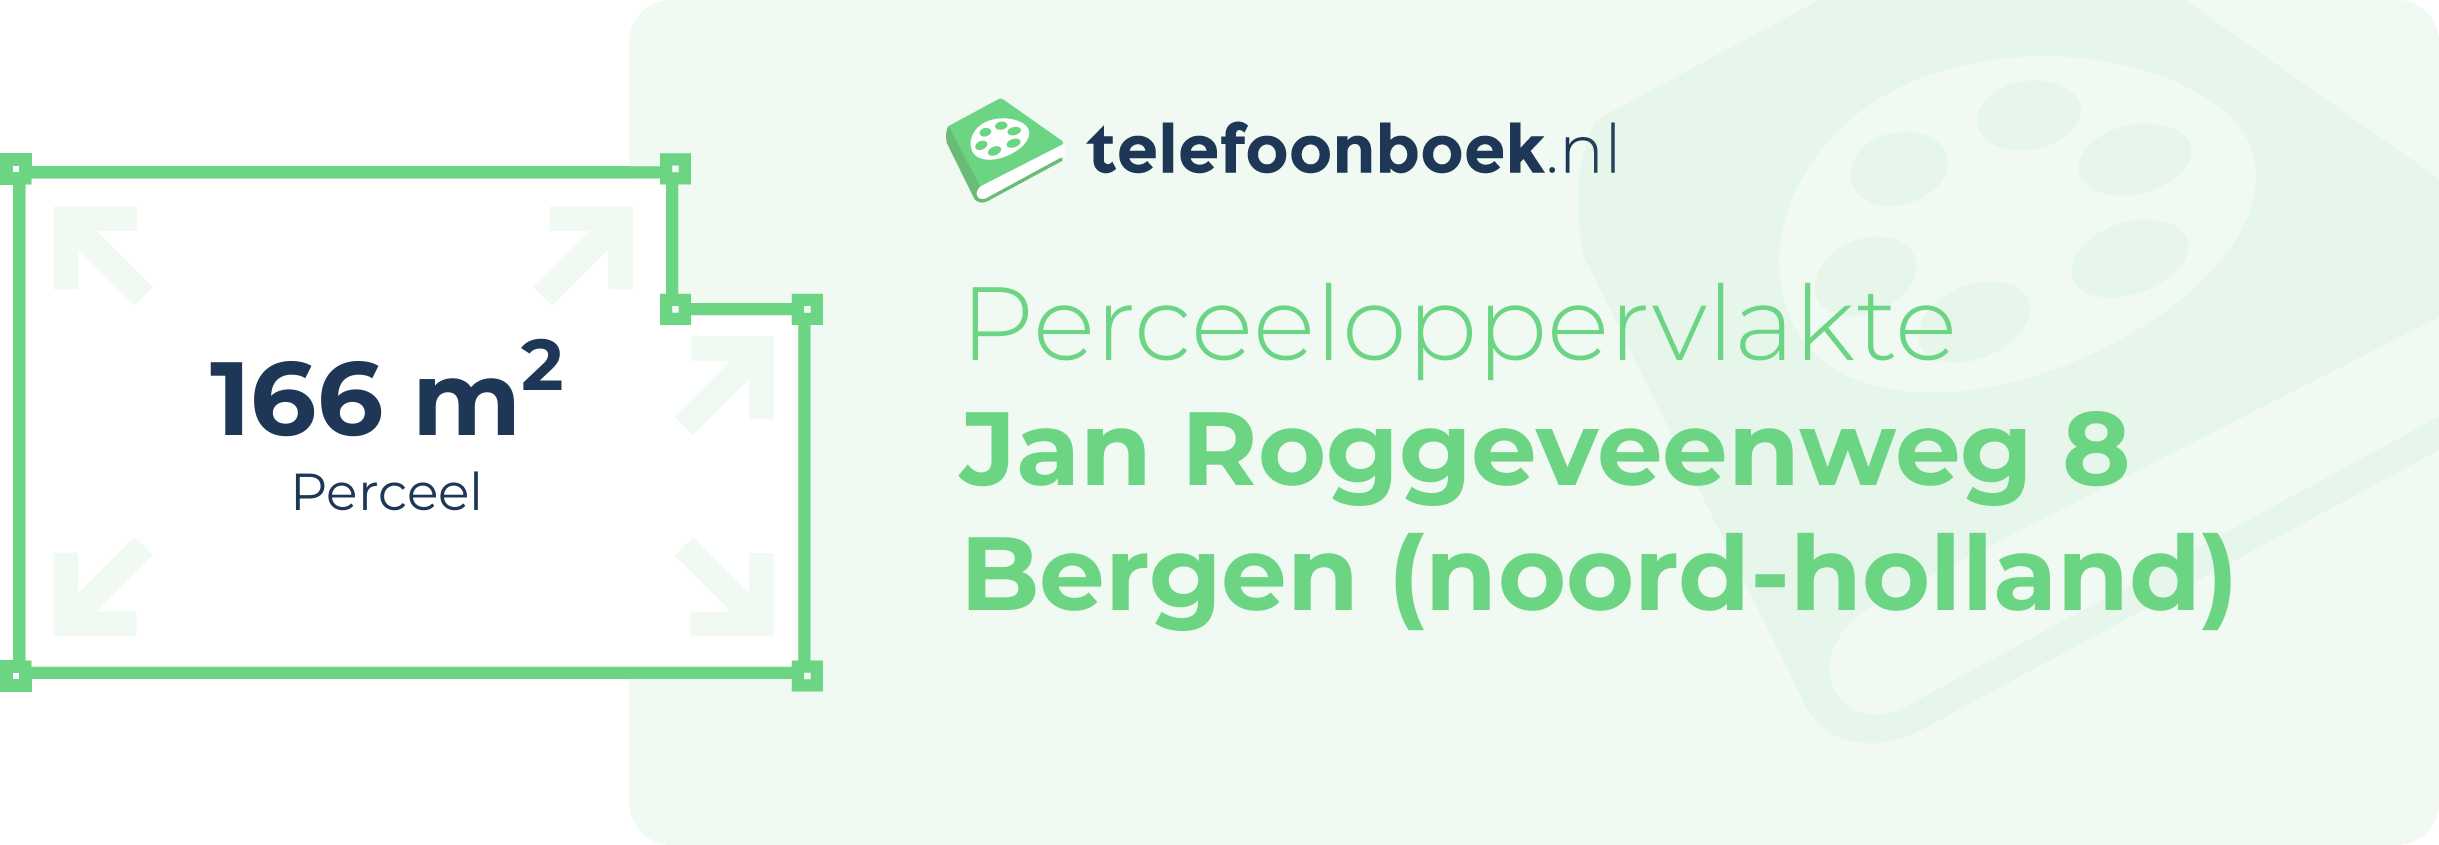 Perceeloppervlakte Jan Roggeveenweg 8 Bergen (Noord-Holland)